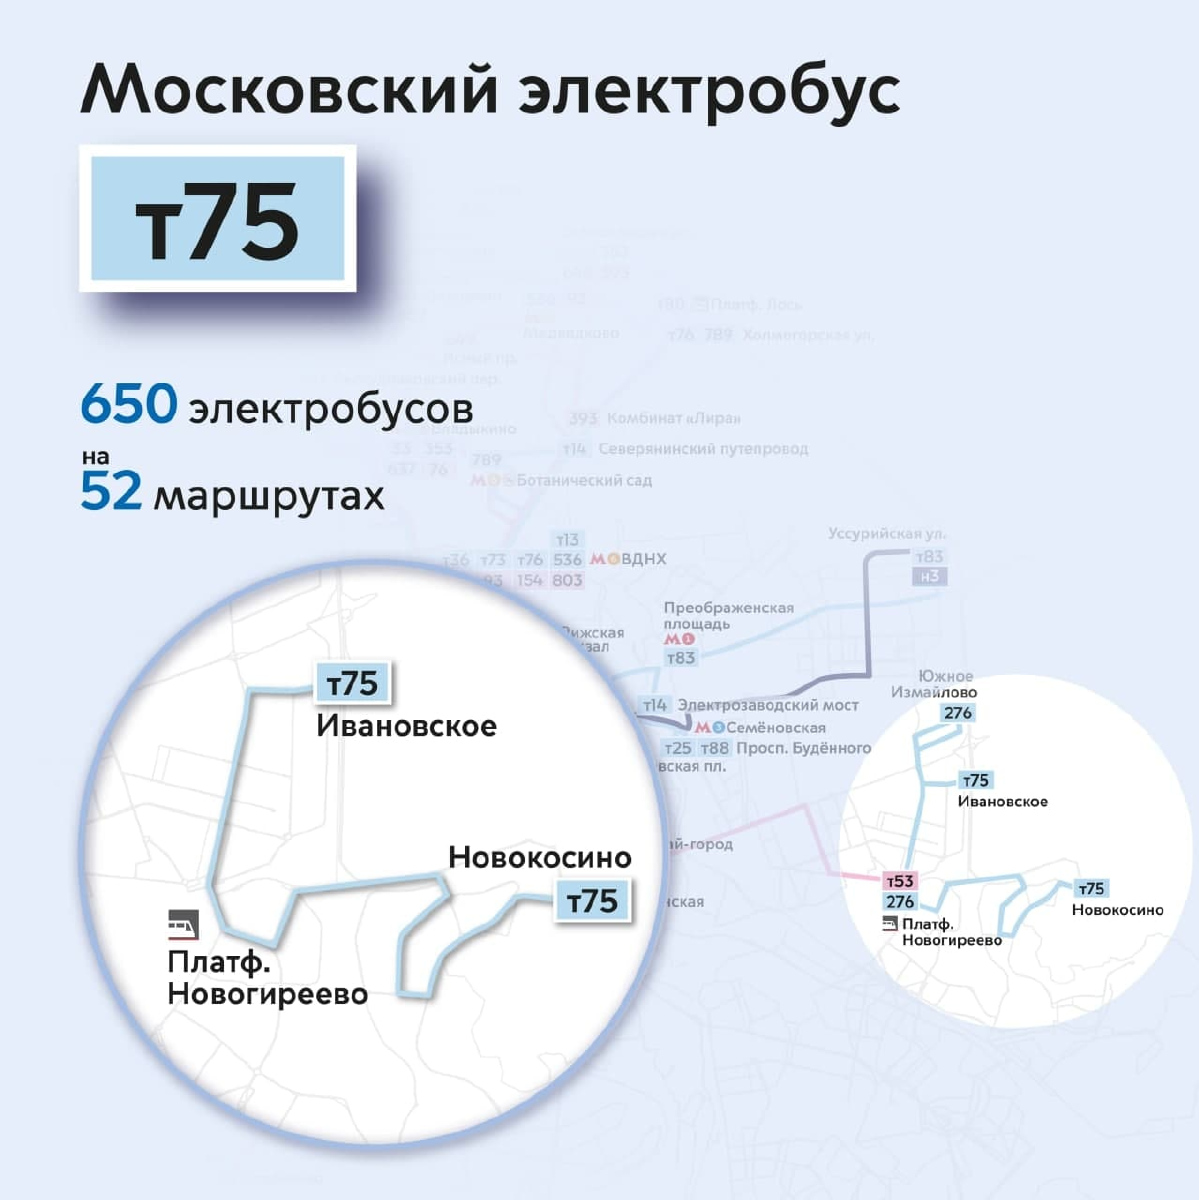 Moscou — Individual Route Maps; Moscou — Maps of Autonomous Electric Bus Lines